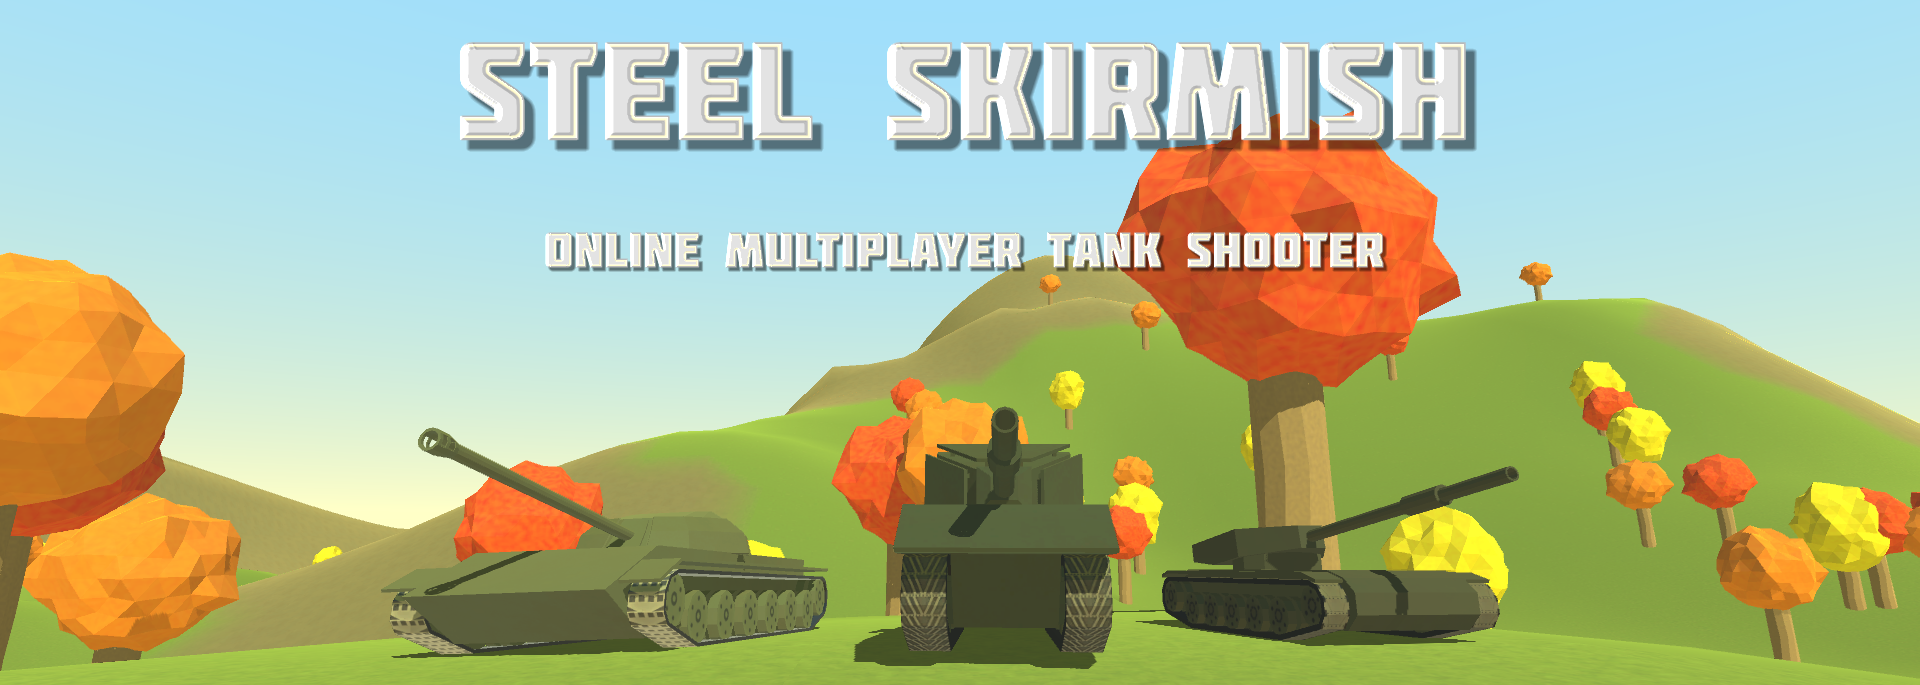 Steel Skirmish: Online Multiplayer Tank Shooter